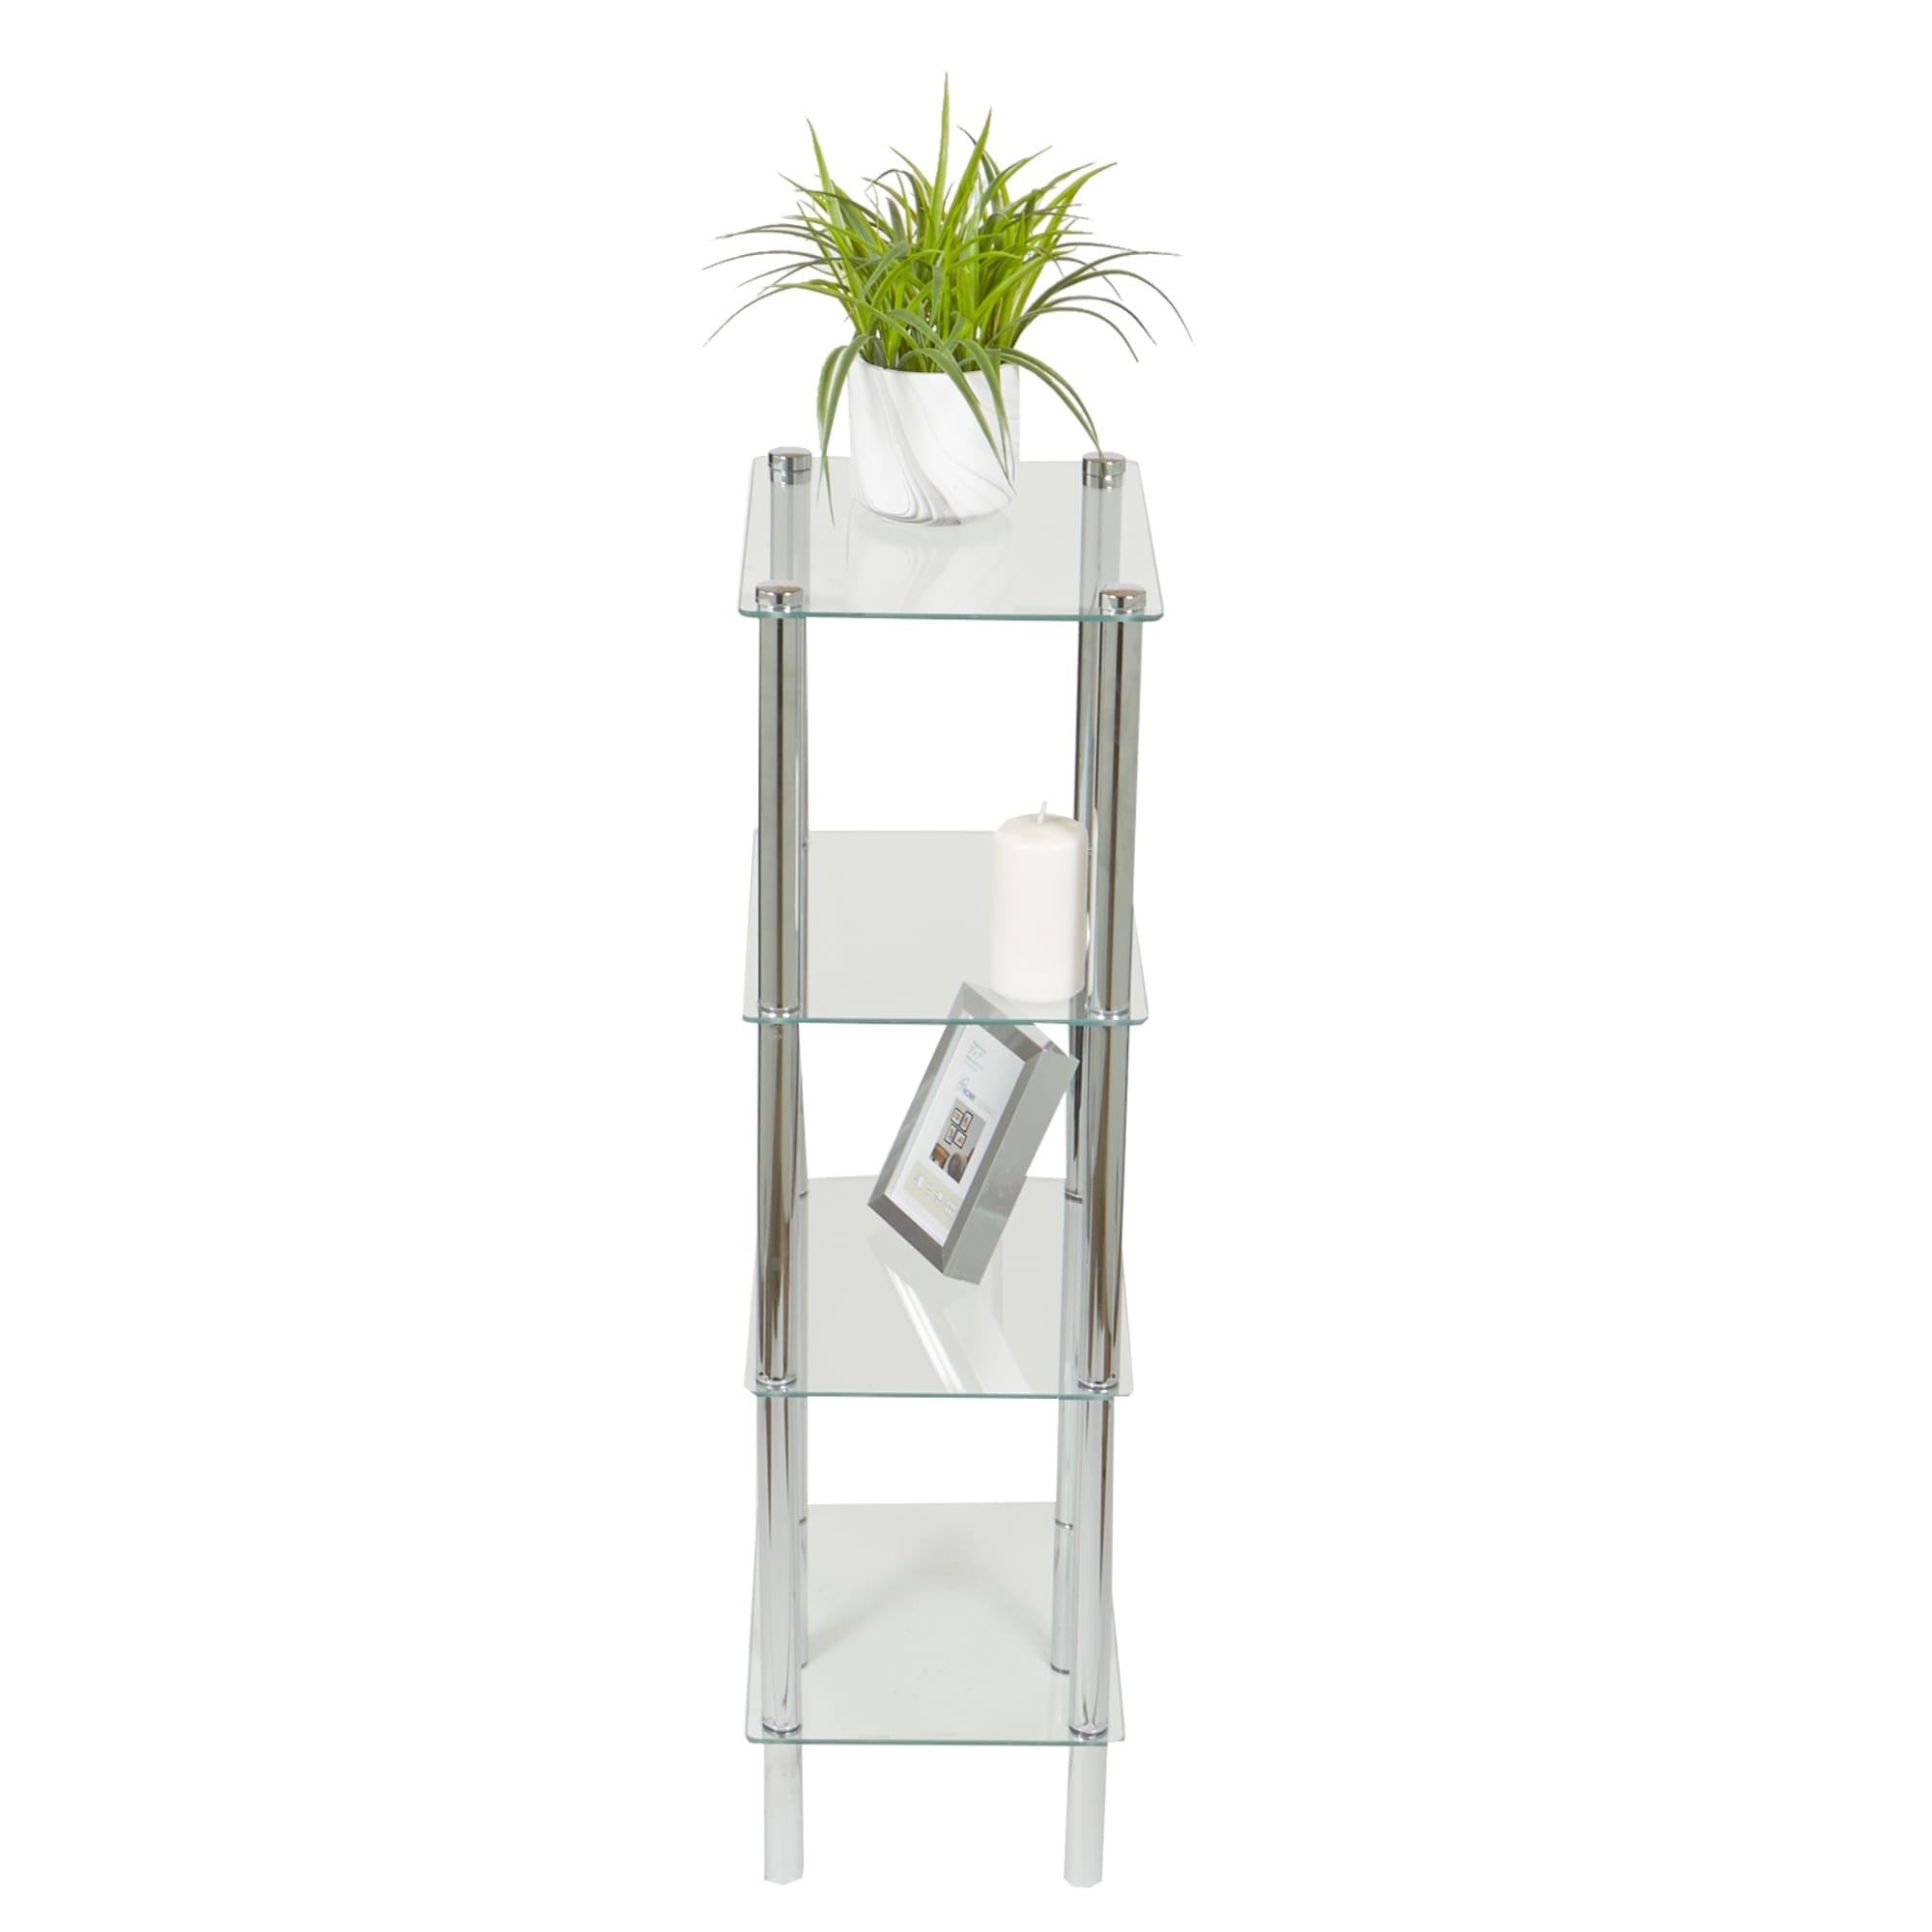 Home Basics 4 Tier Multi Use Rectangle Glass Corner Shelf, Clear $60.00 EACH, CASE PACK OF 3